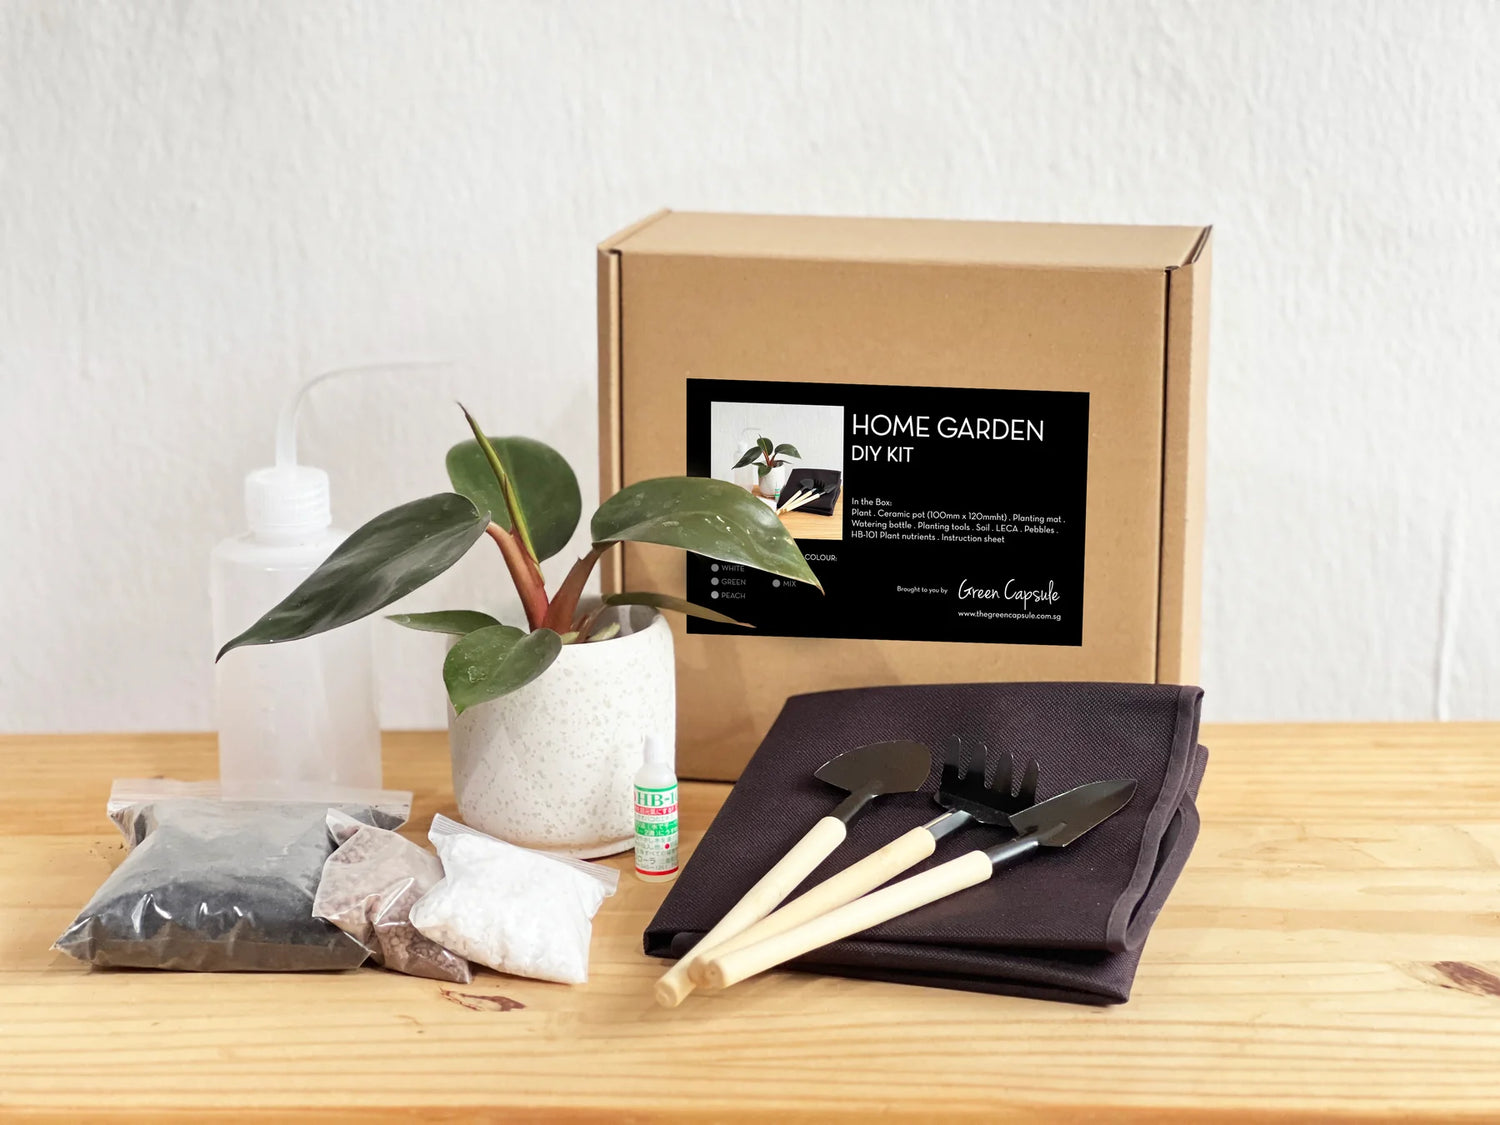 The Green Capsule - Home Garden DIY kit